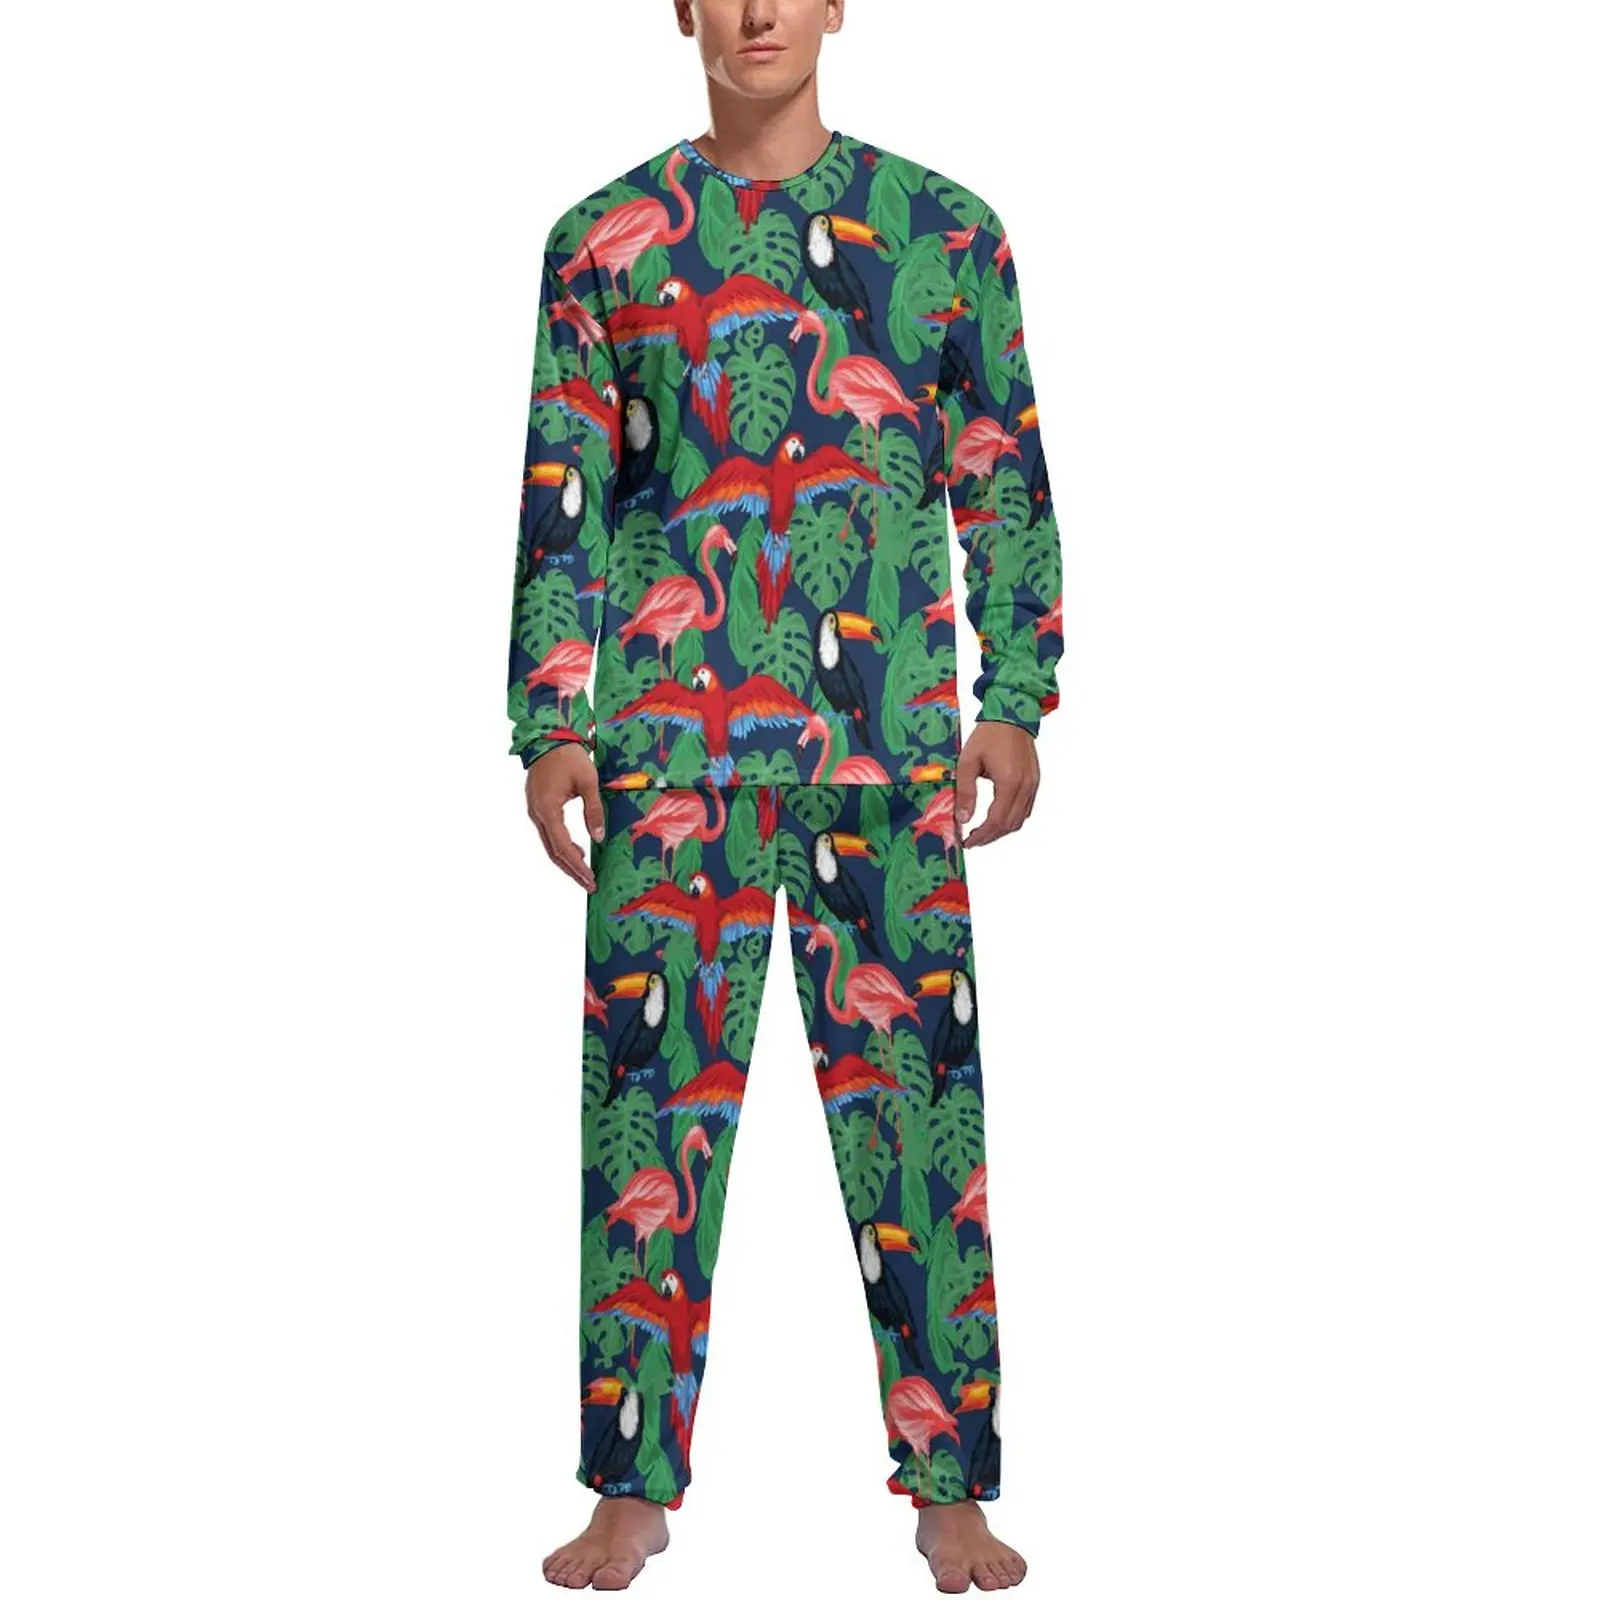 

Tropical Birds Pajamas Palm Leaves Print Men Long-Sleeve Warm Pajama Sets 2 Pieces Casual Winter Graphic Nightwear Birthday Gift